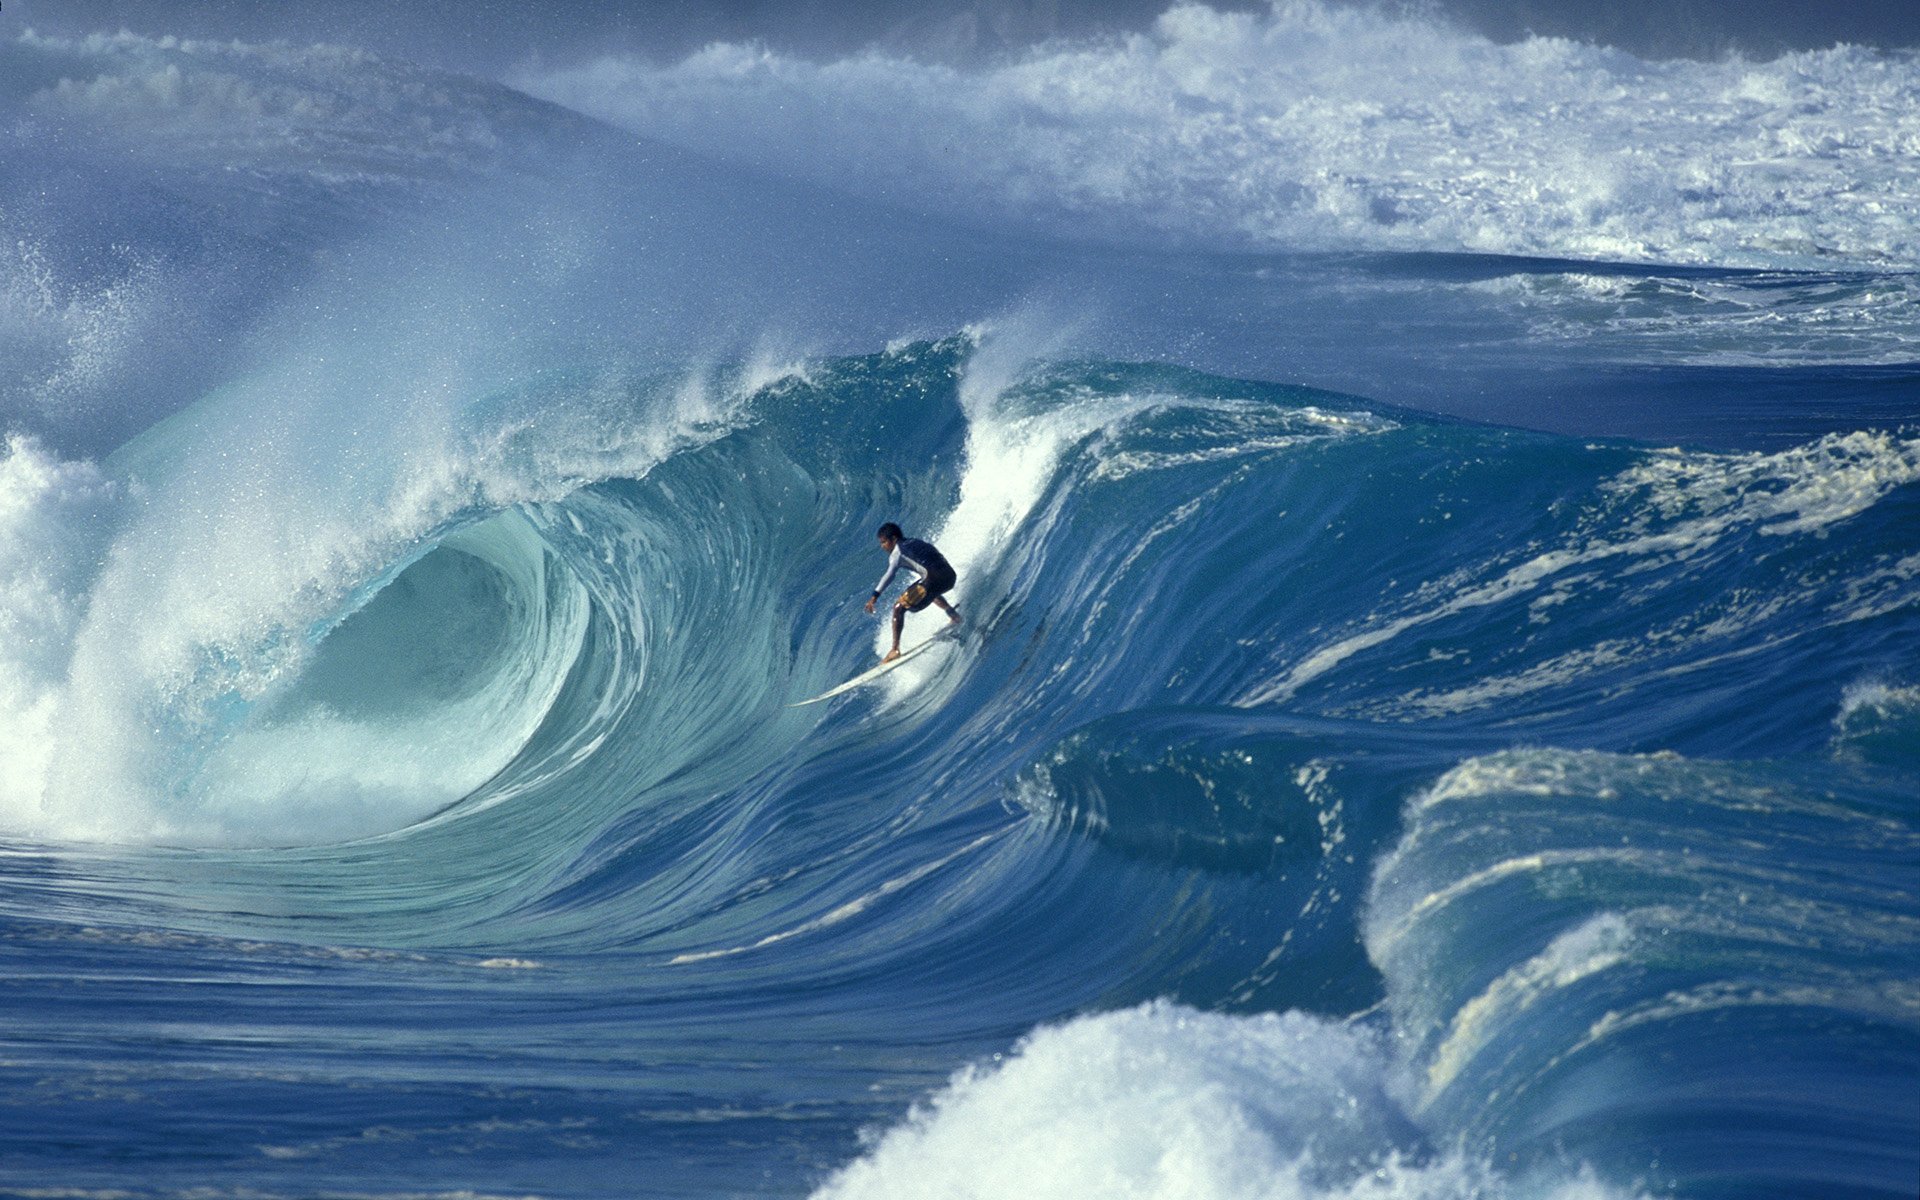 Download Wave Surfing Wallpaper 6725 1920x1200 px High Resolution